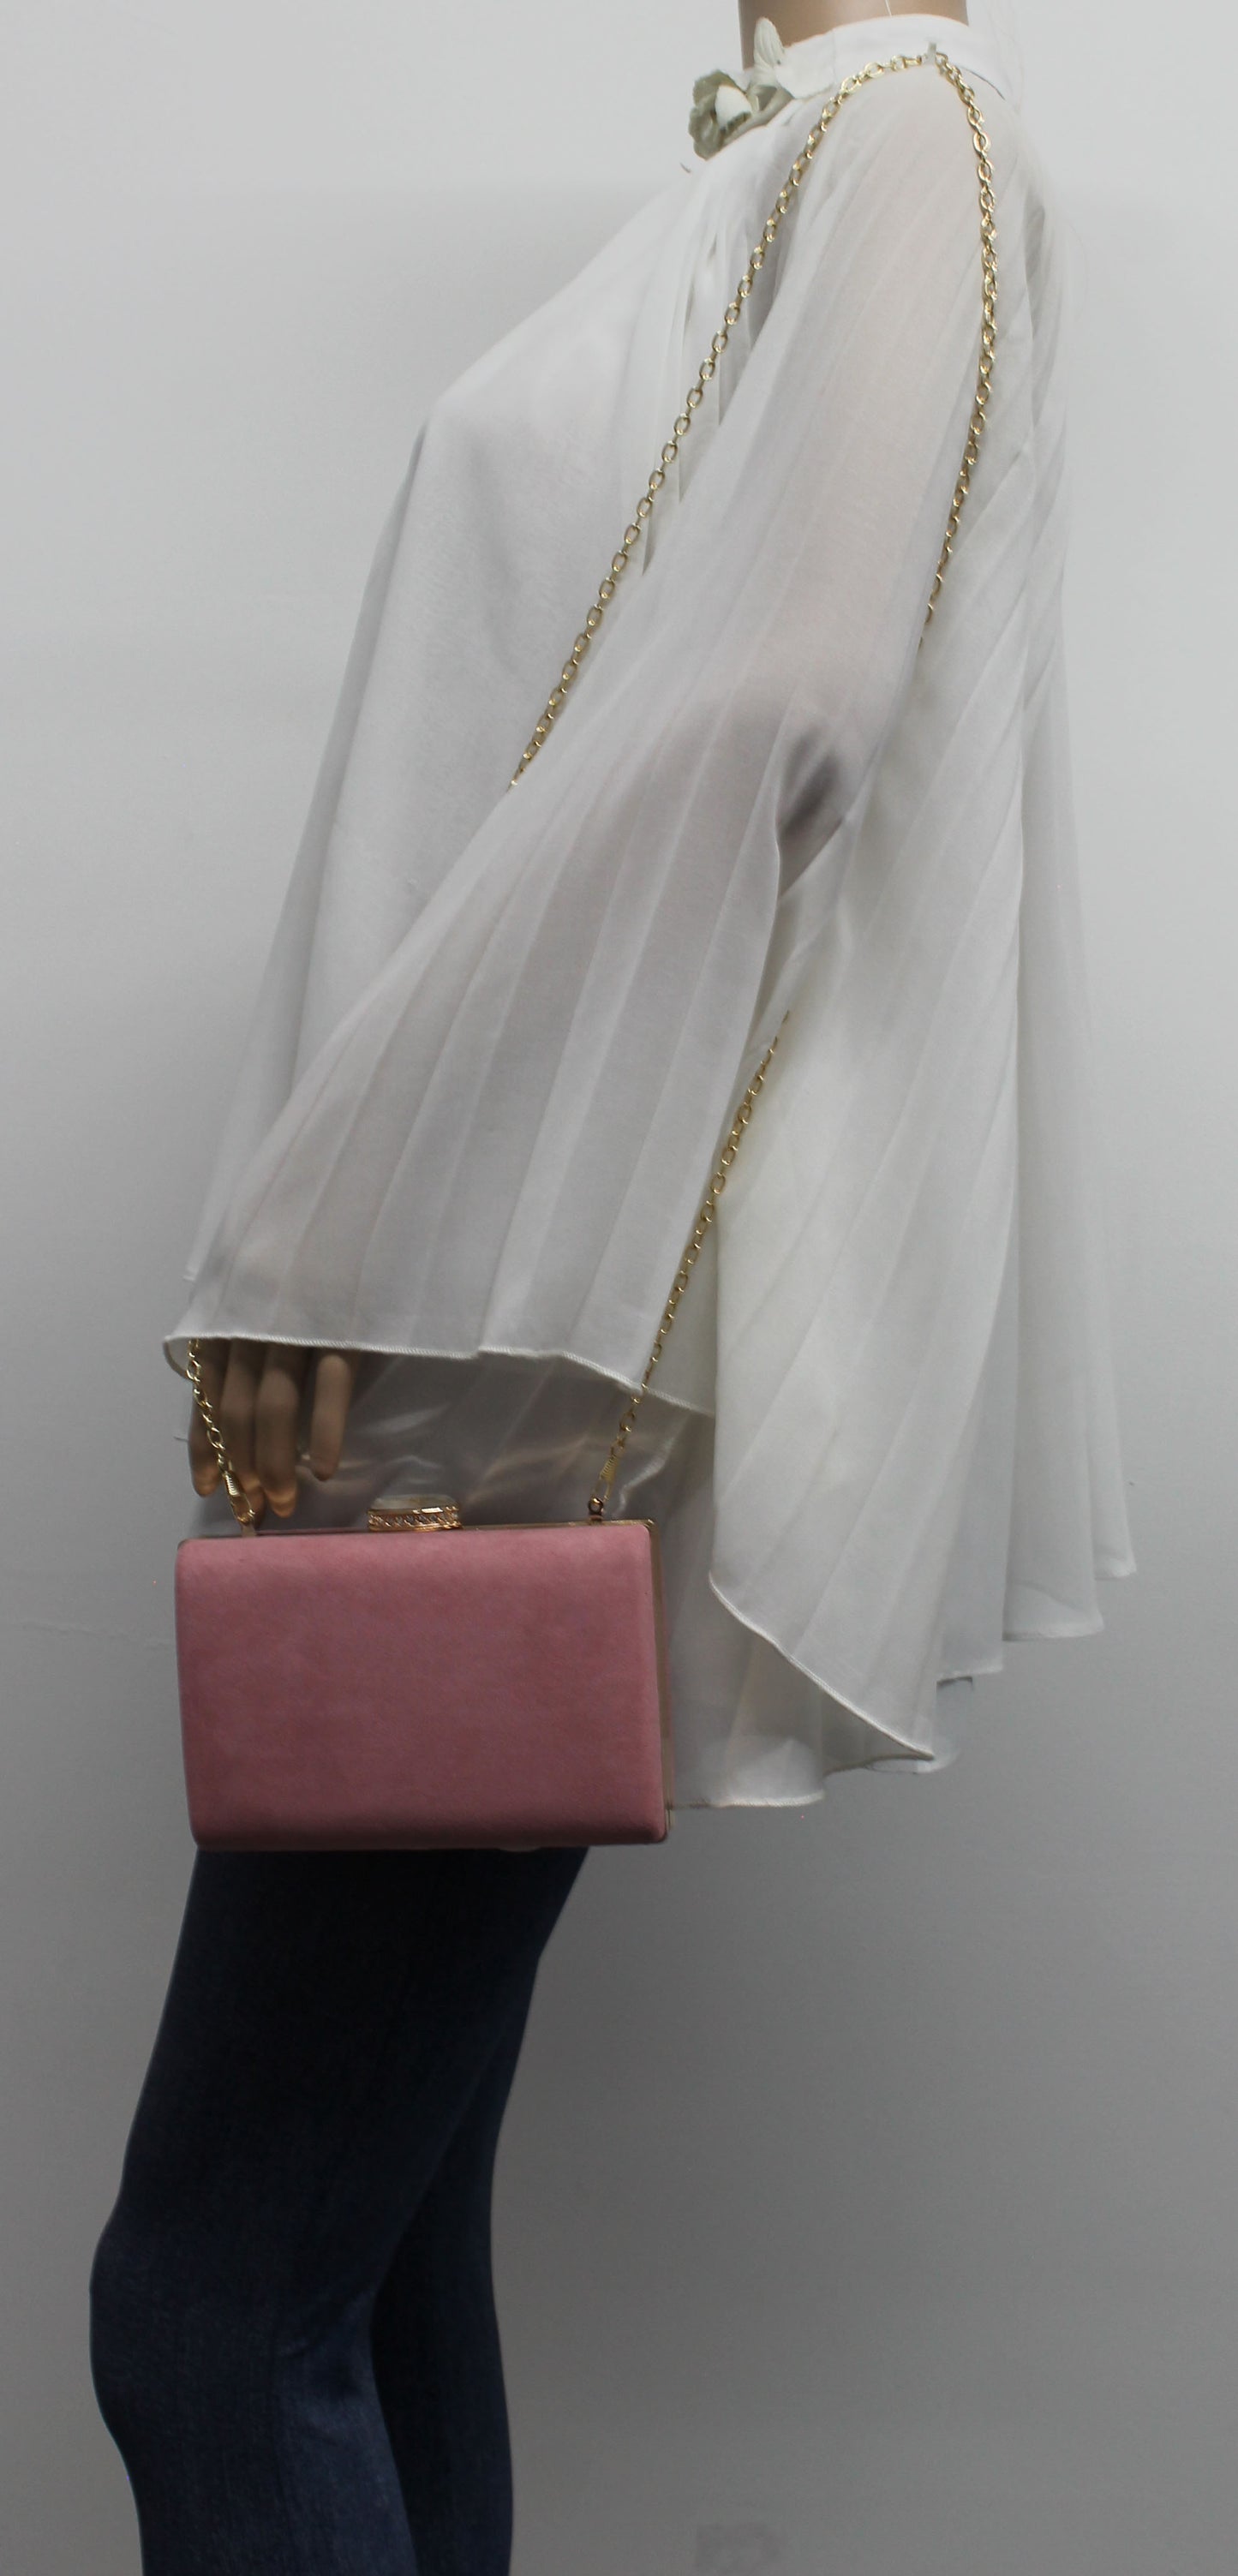 SWANKYSWANS Surrey Suede Clutch Bag Blush Cute Cheap Clutch Bag For Weddings School and Work